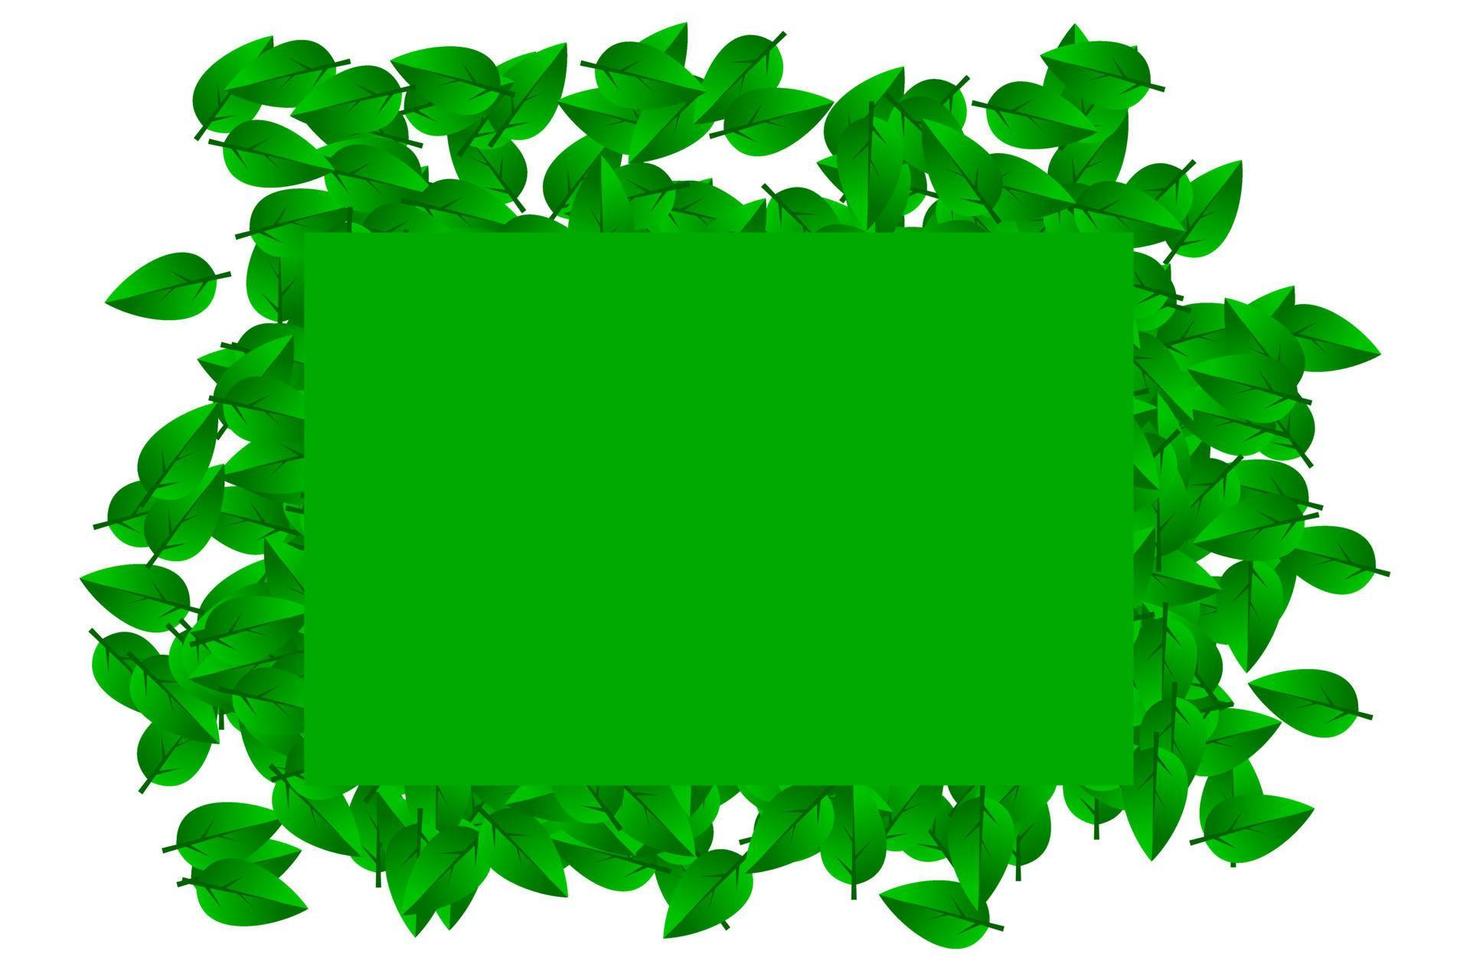 textura de folhas verdes vetor